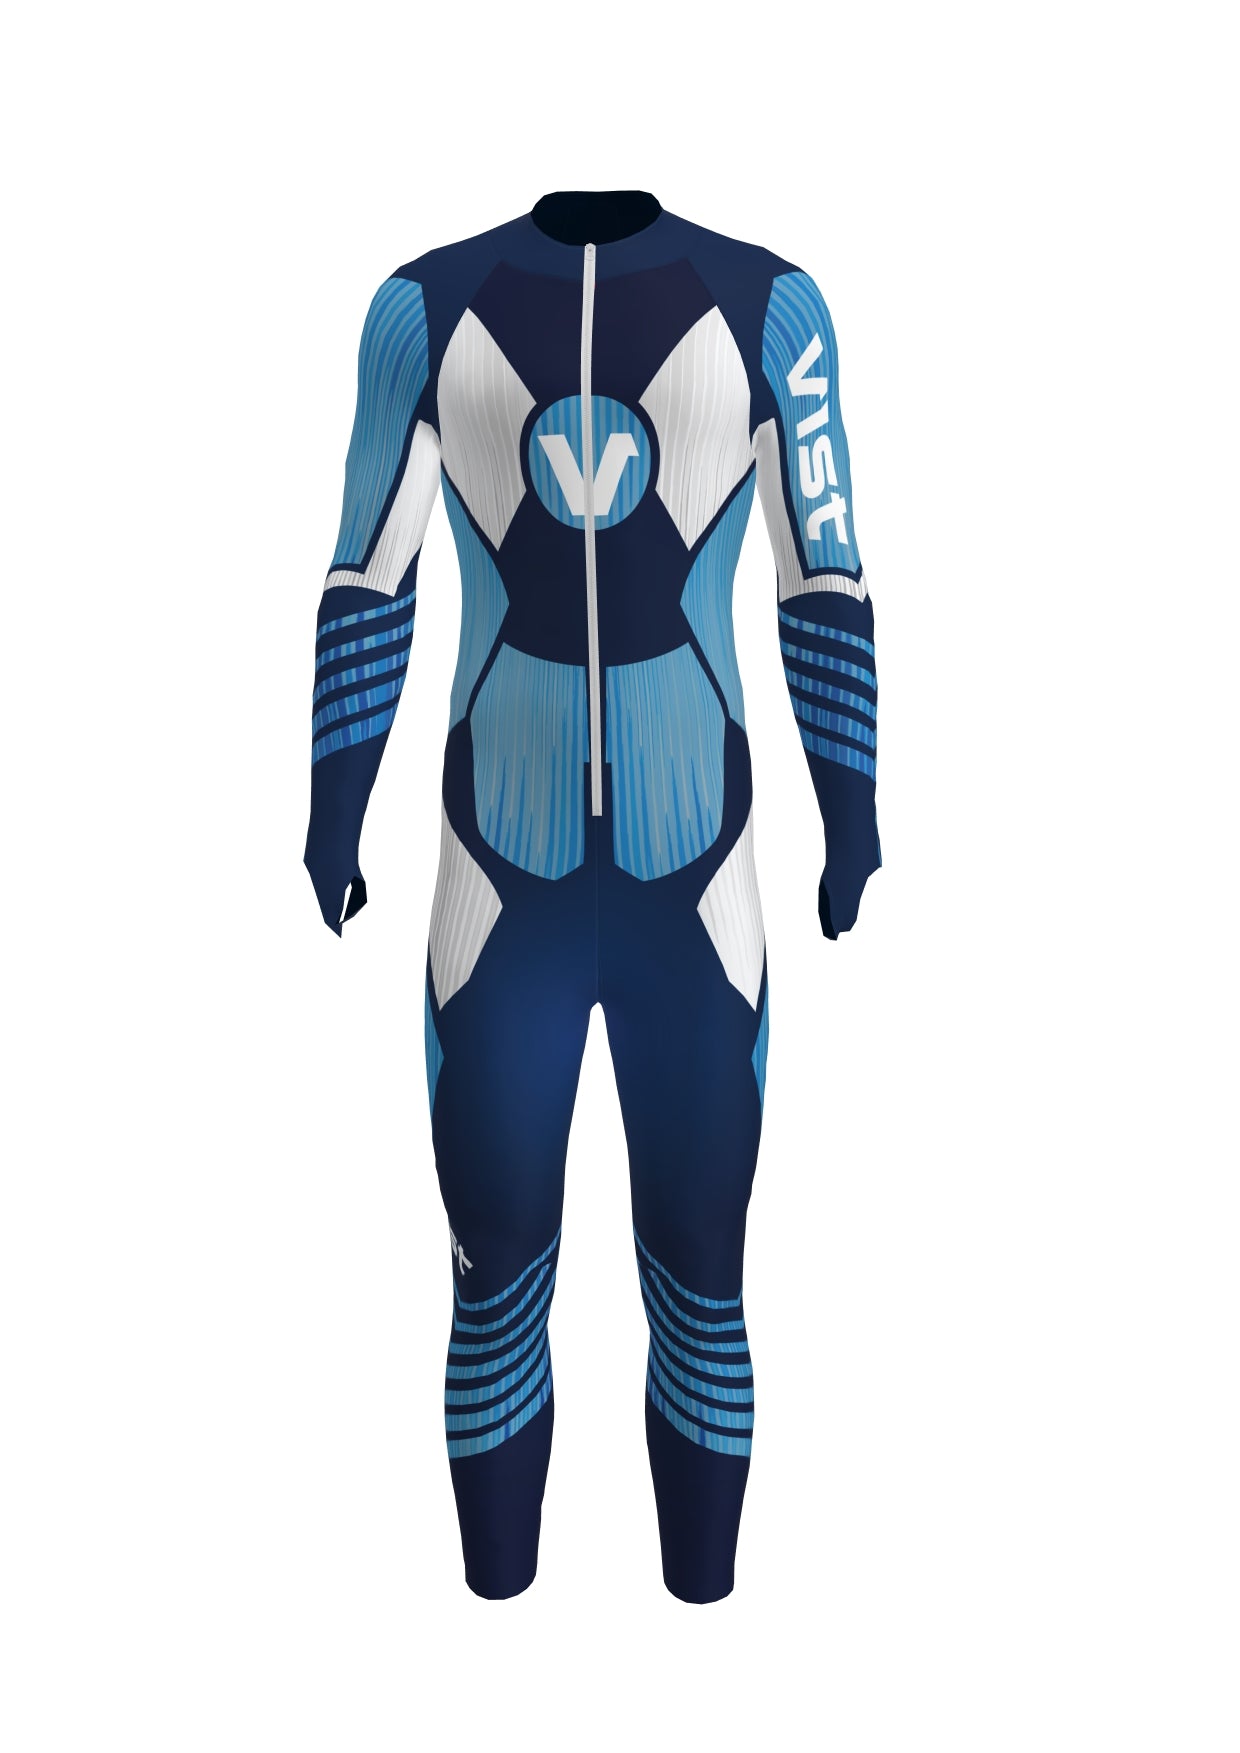 Armor Padded Race Suit